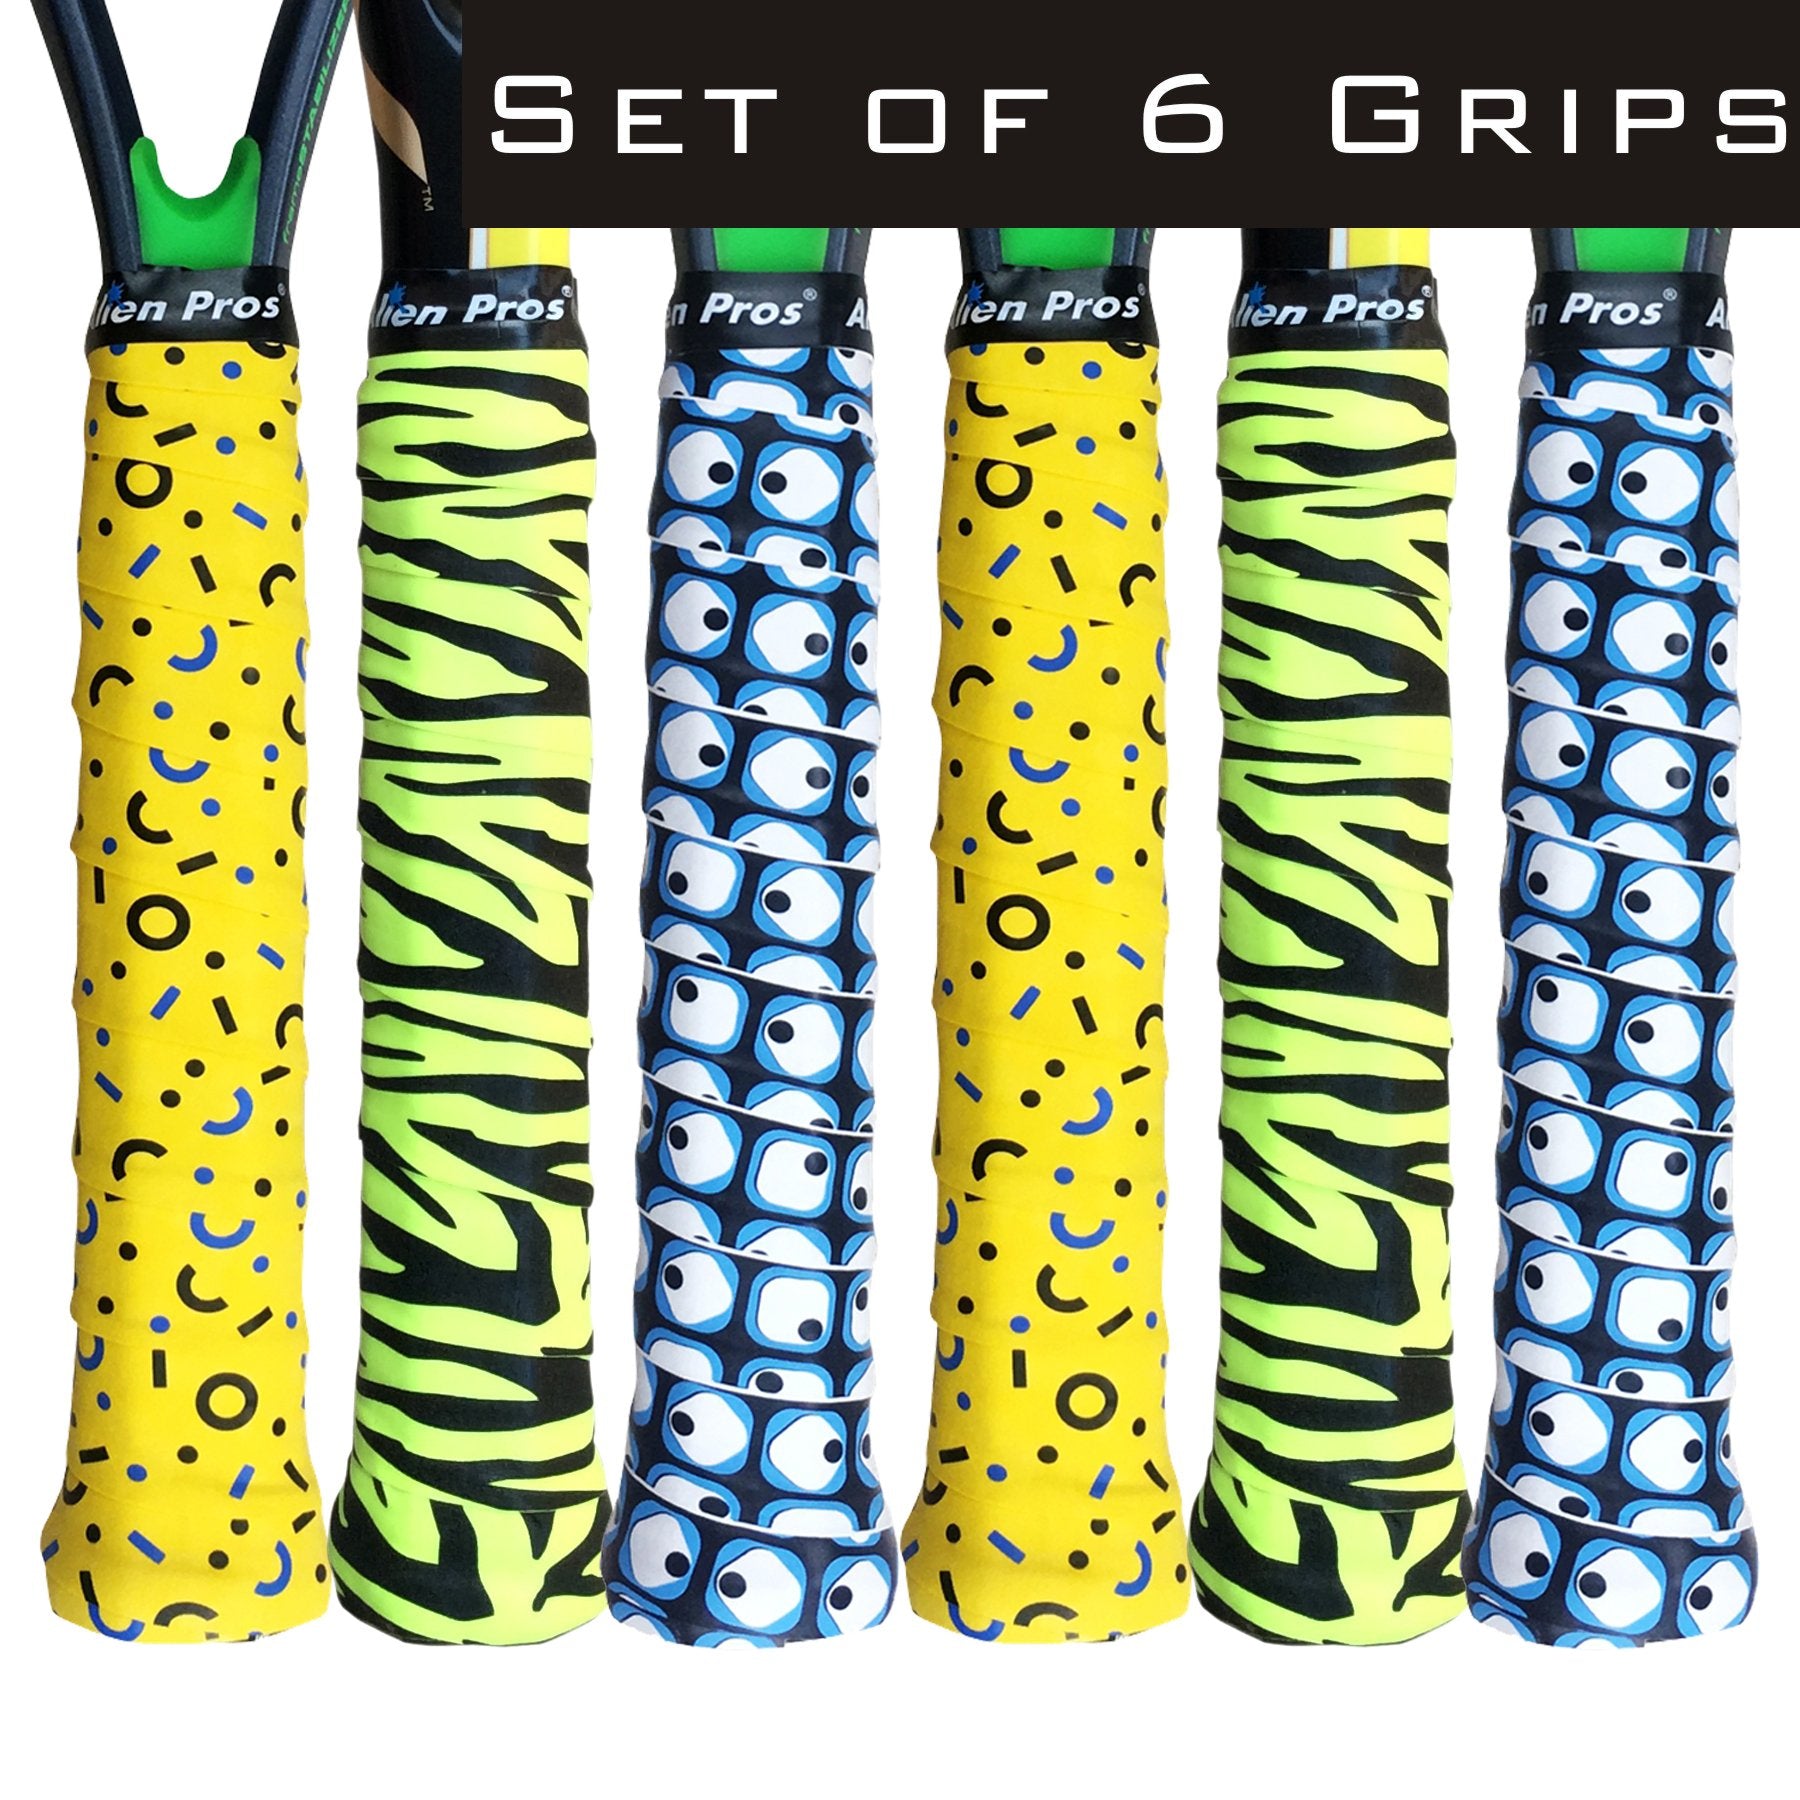 ALIEN PROS Tennis Racket Grip Tape (6 Grips) – Precut and Light Tac Feel  Tennis Grip – Tennis Overgrip Grip Tape Tennis Racket – Wrap Your Racquet  for